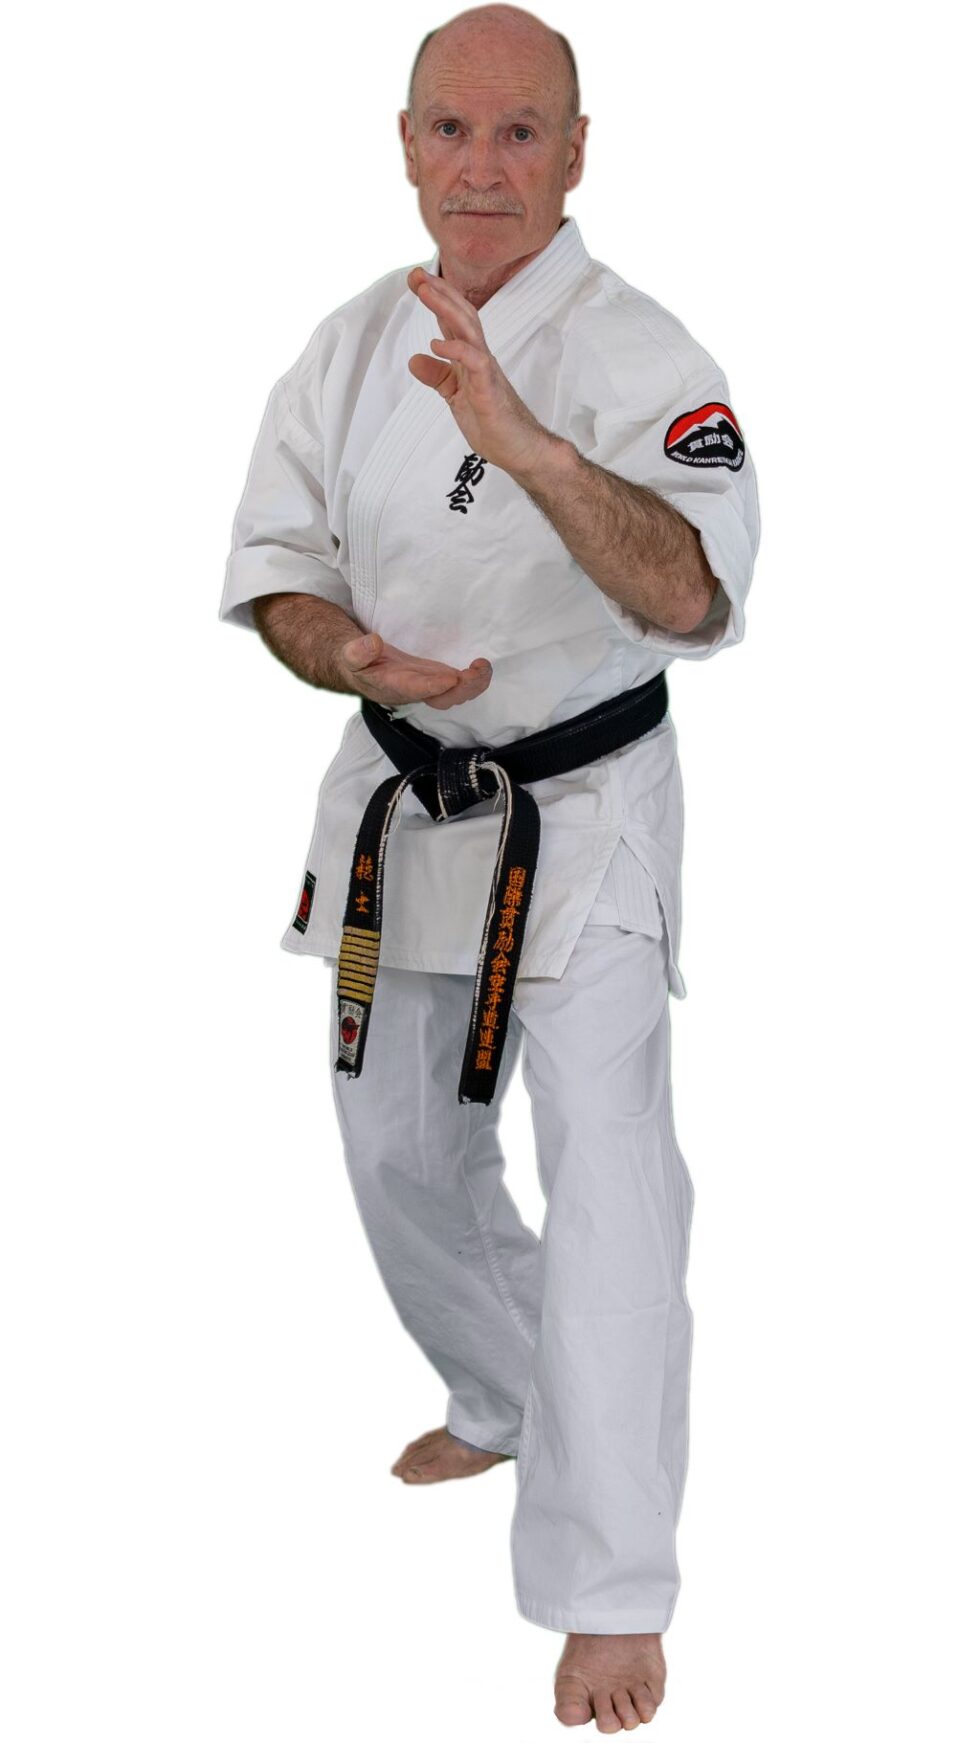 Grand Master - Kanreikai Karate of Connecticut